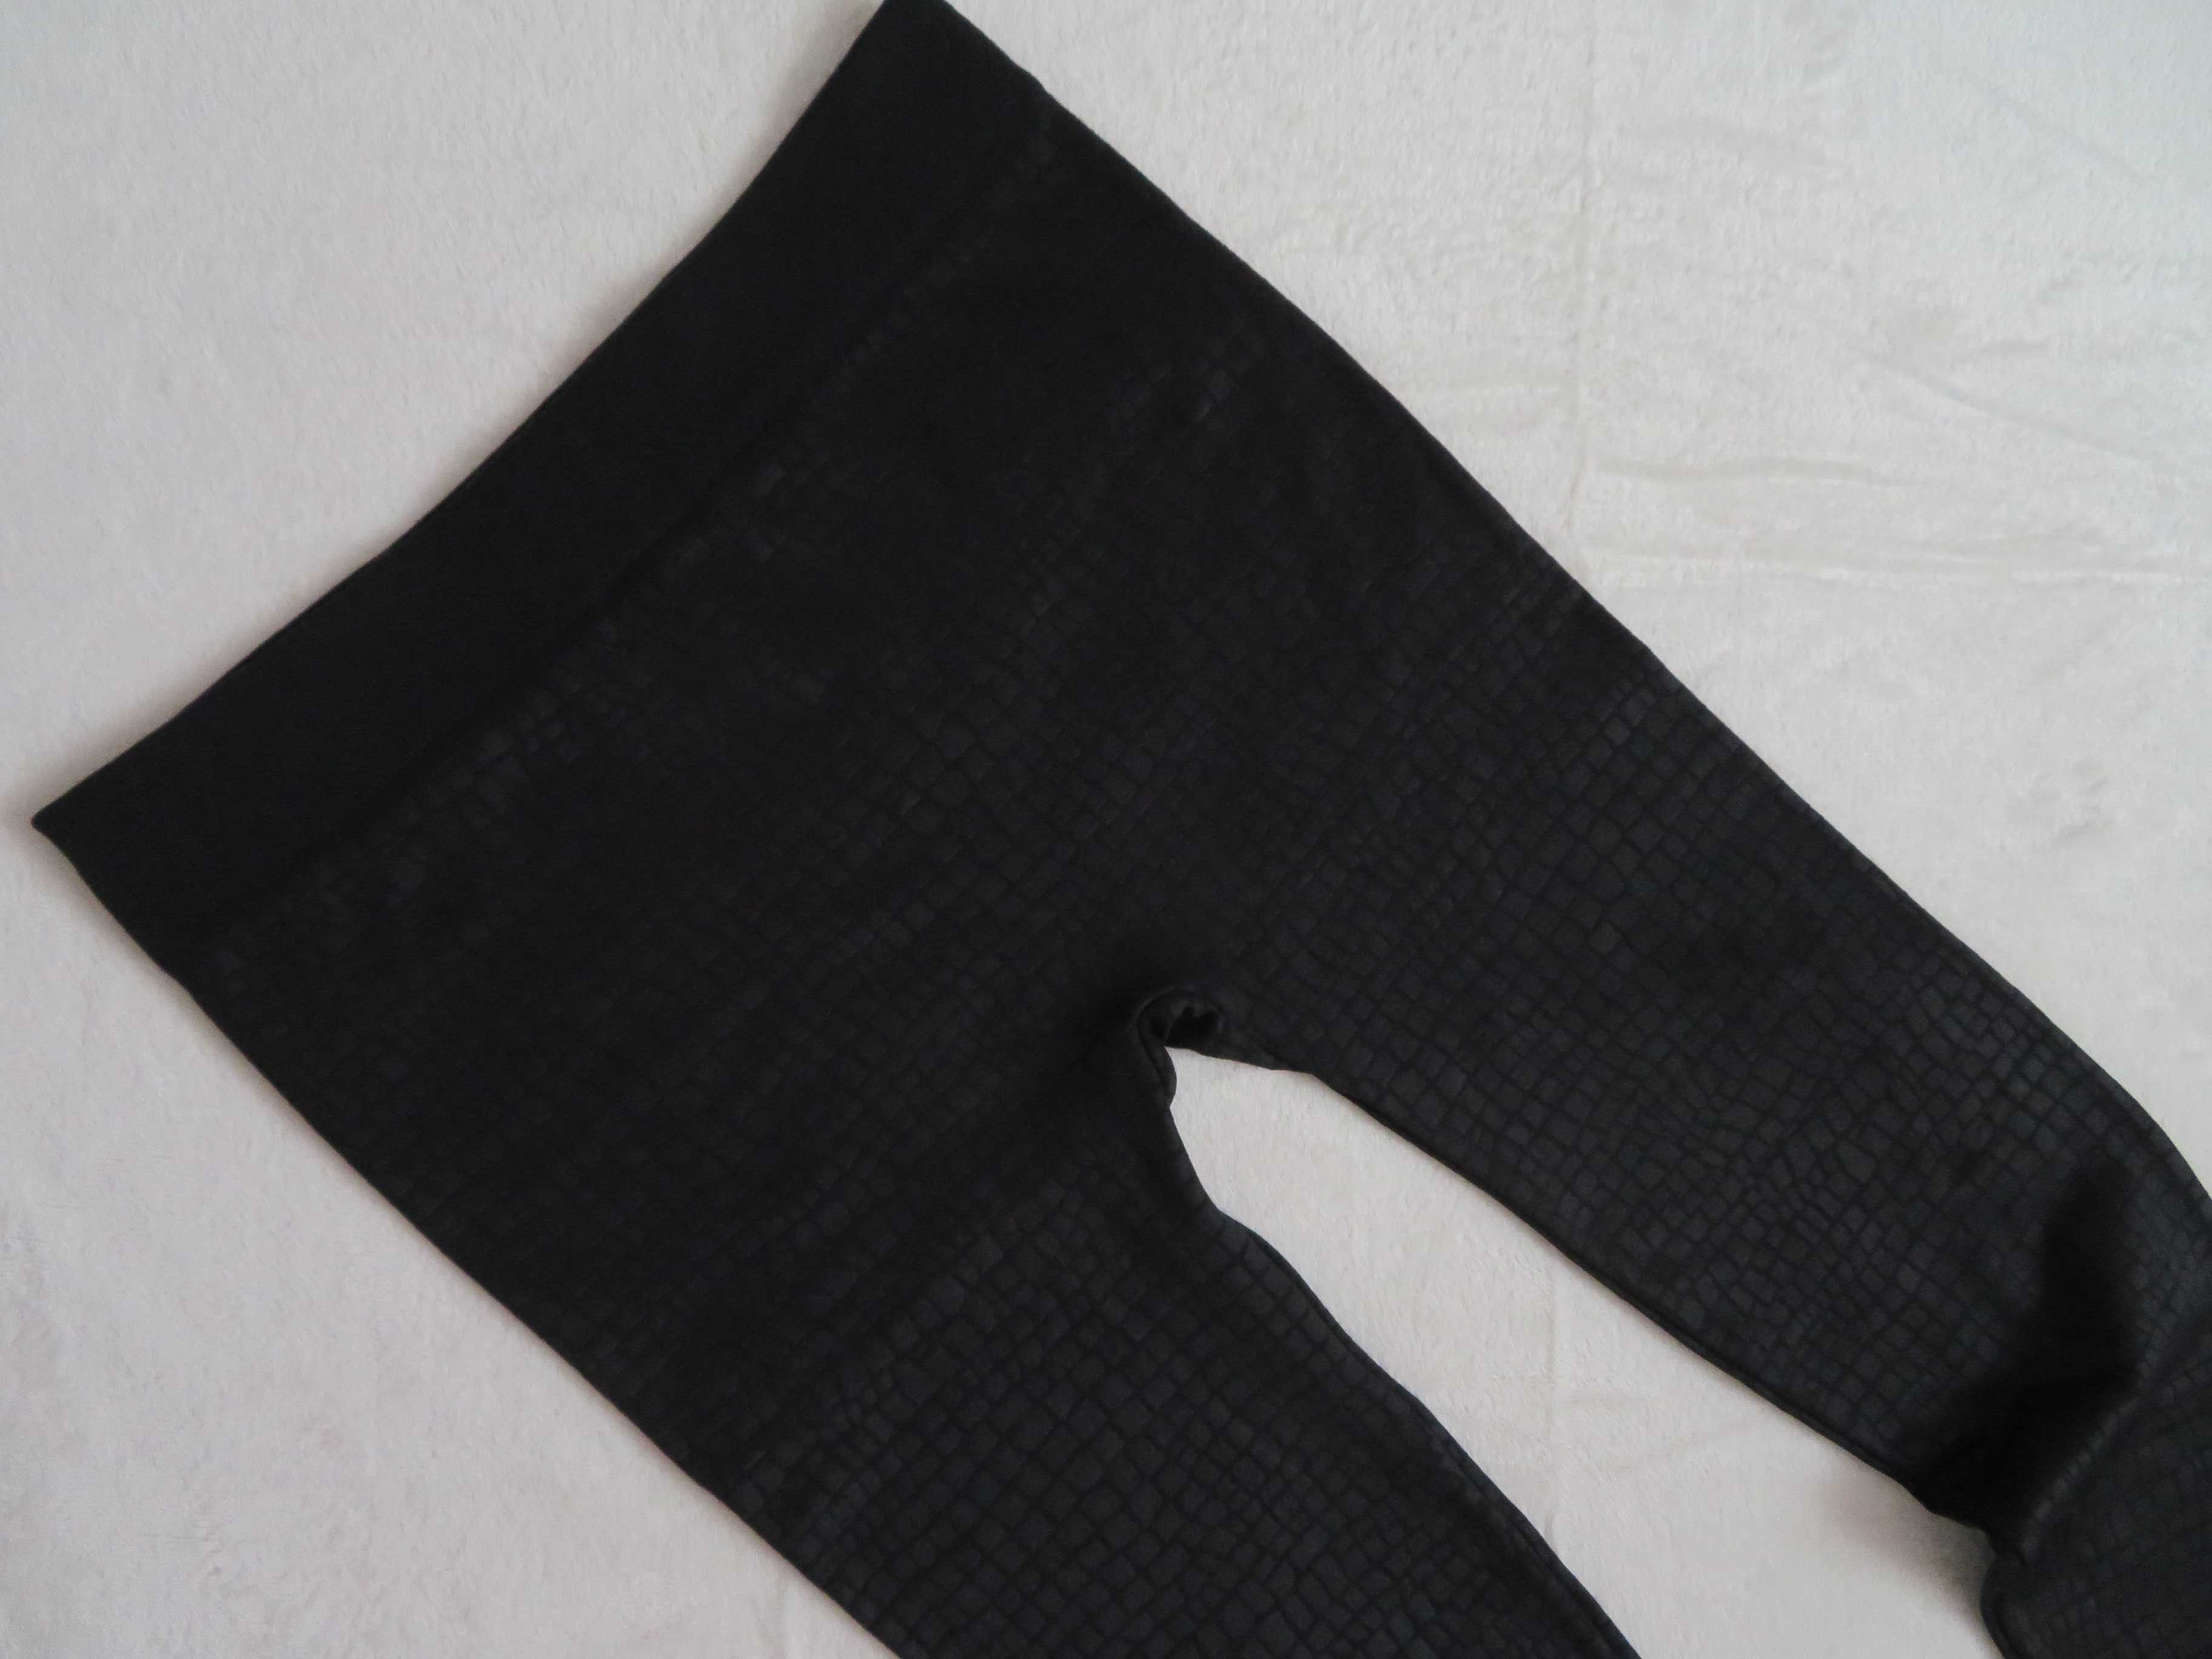 NOWE czarne getry leginsy legginsy damskie spodnie Wzór M/L 38/40